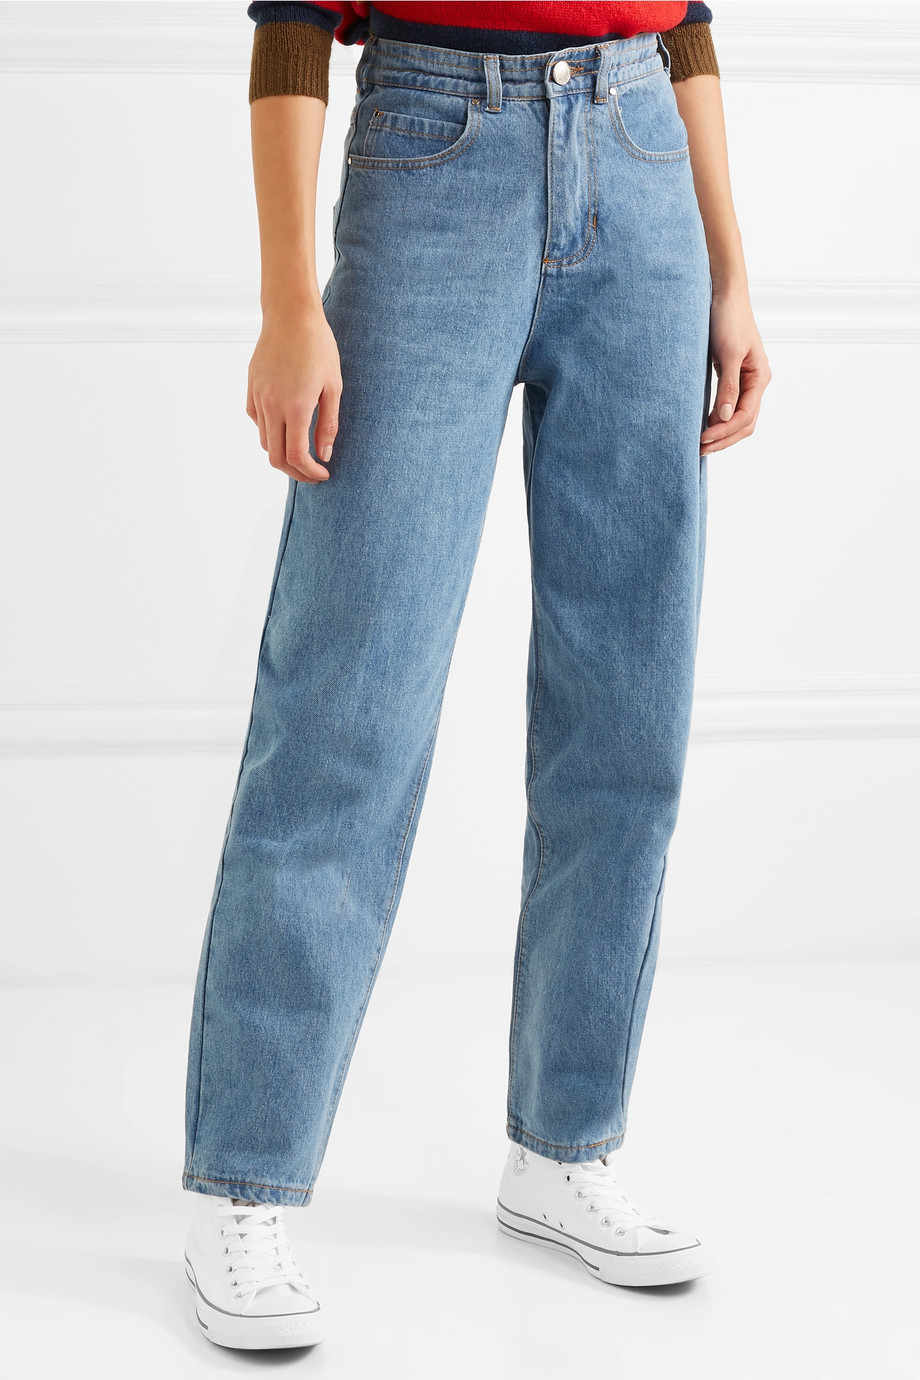 elastic waist denim jeans